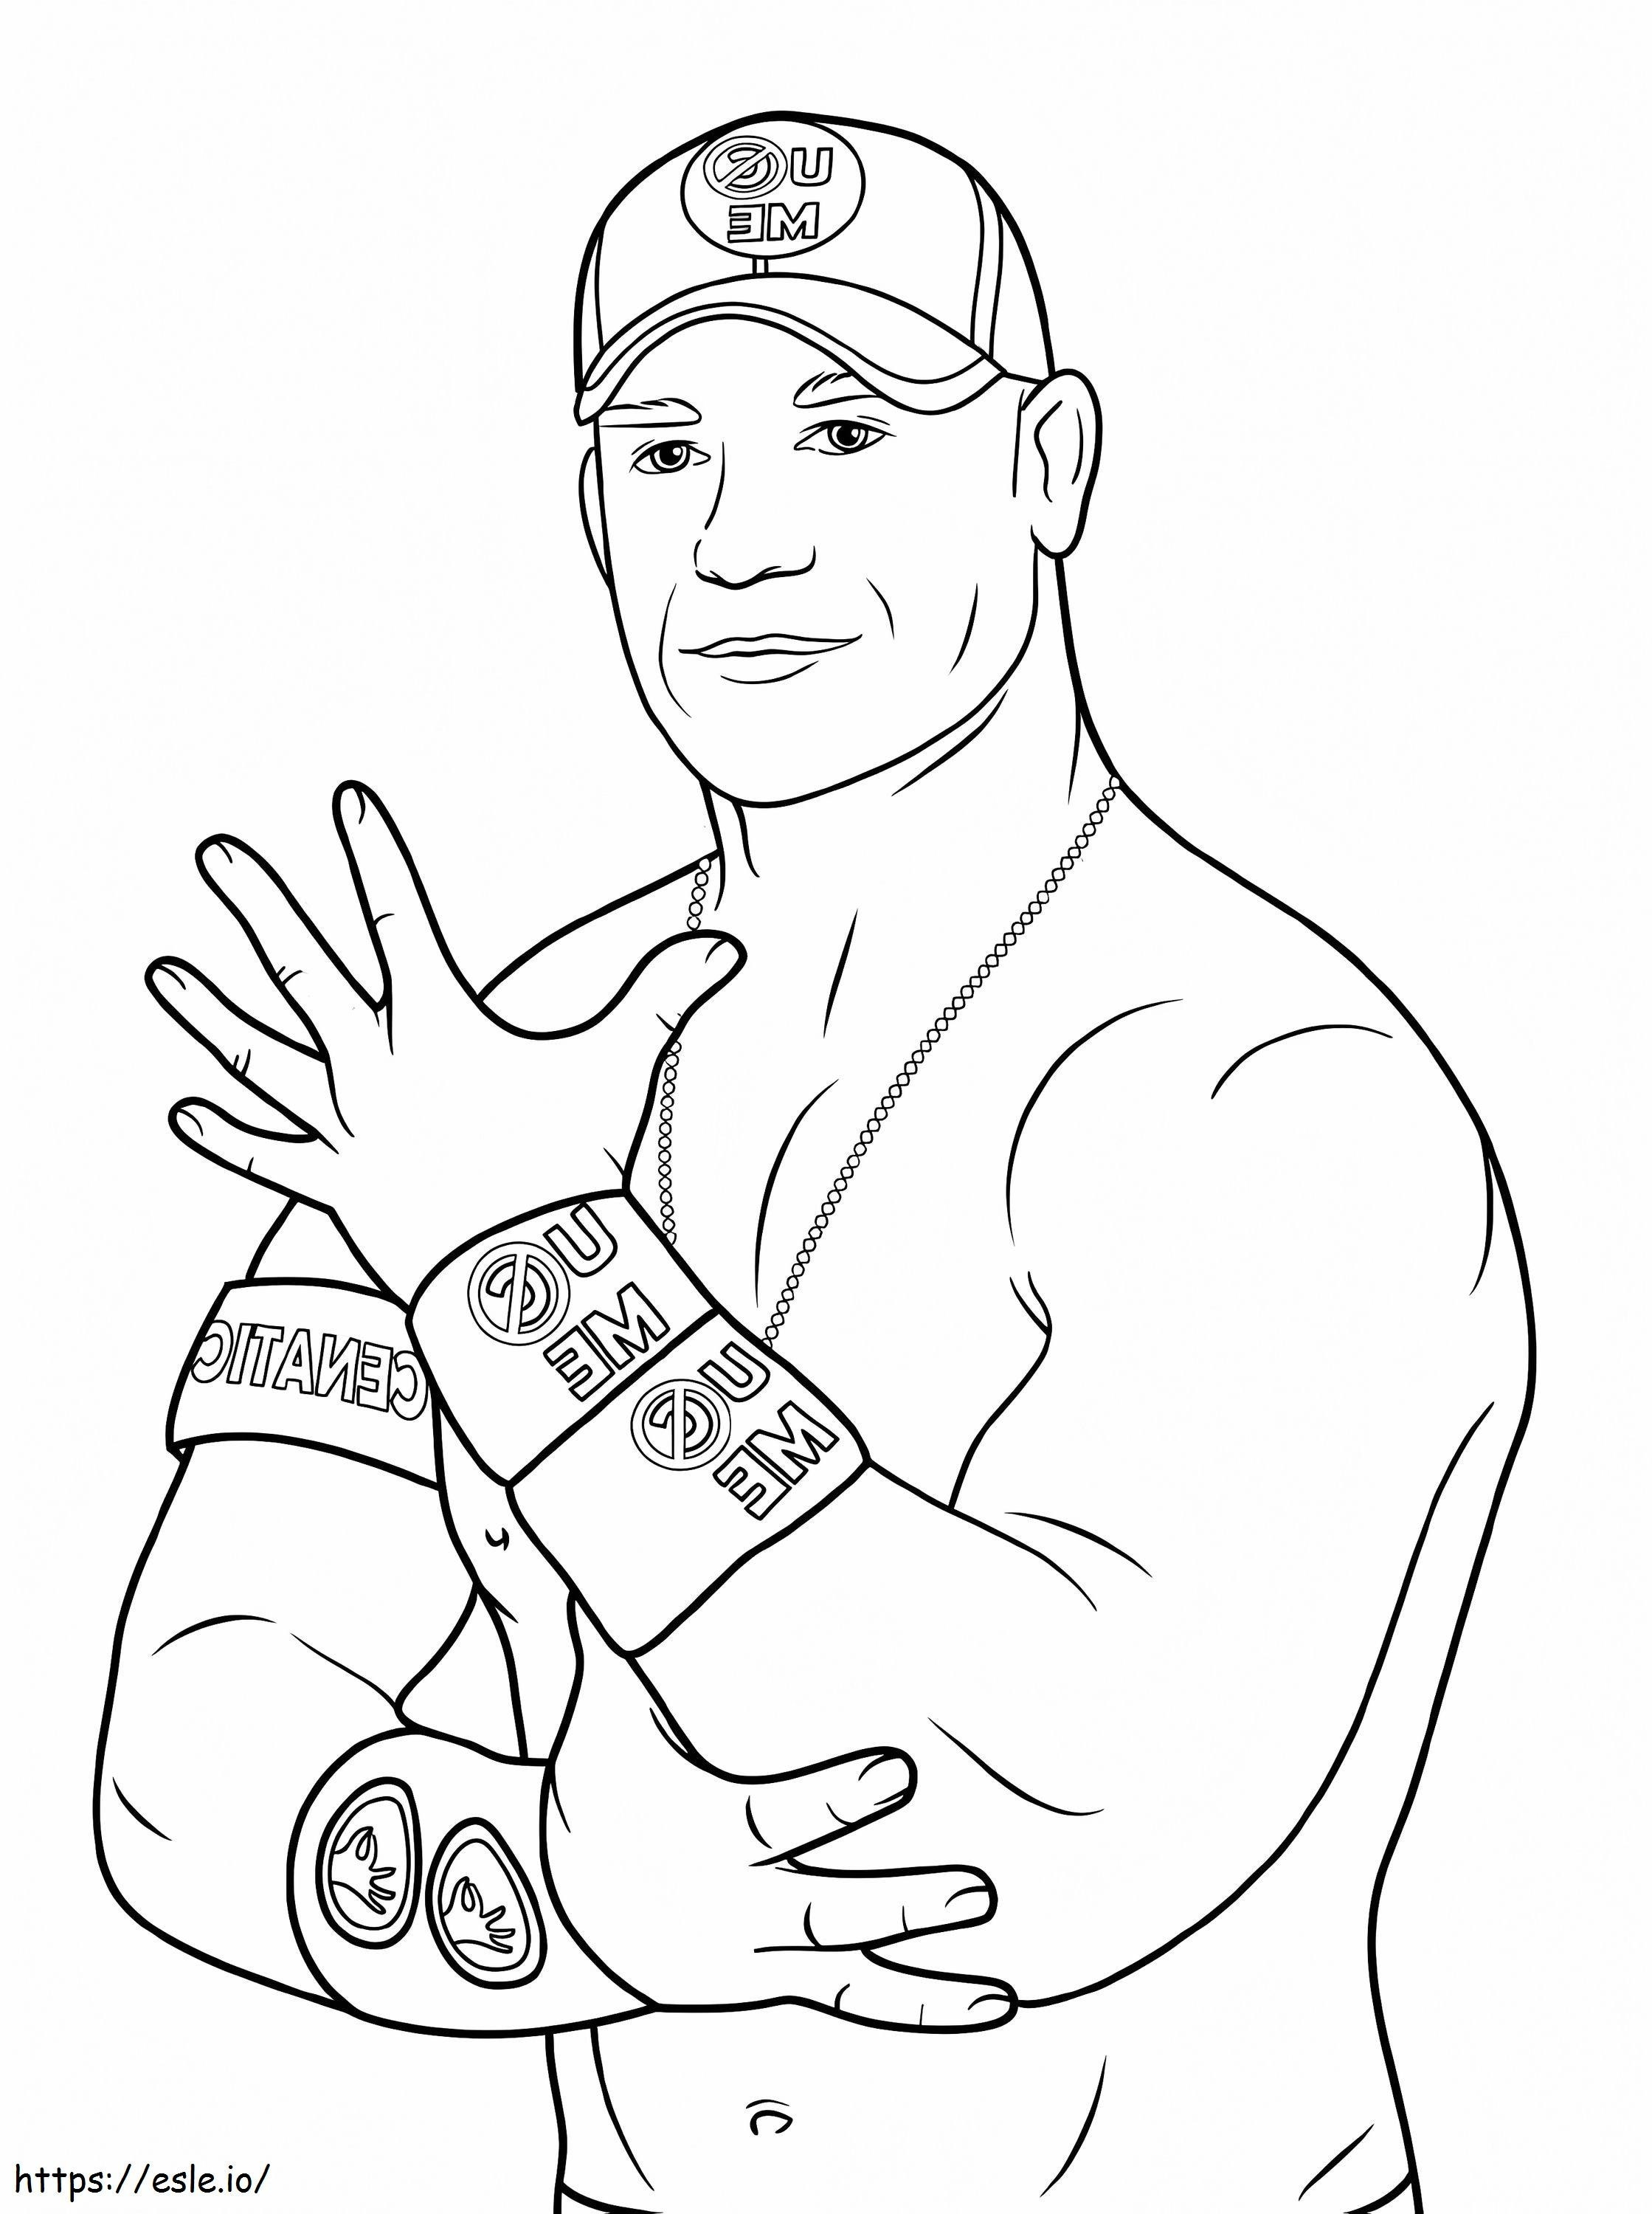 WWE John Cena coloring page